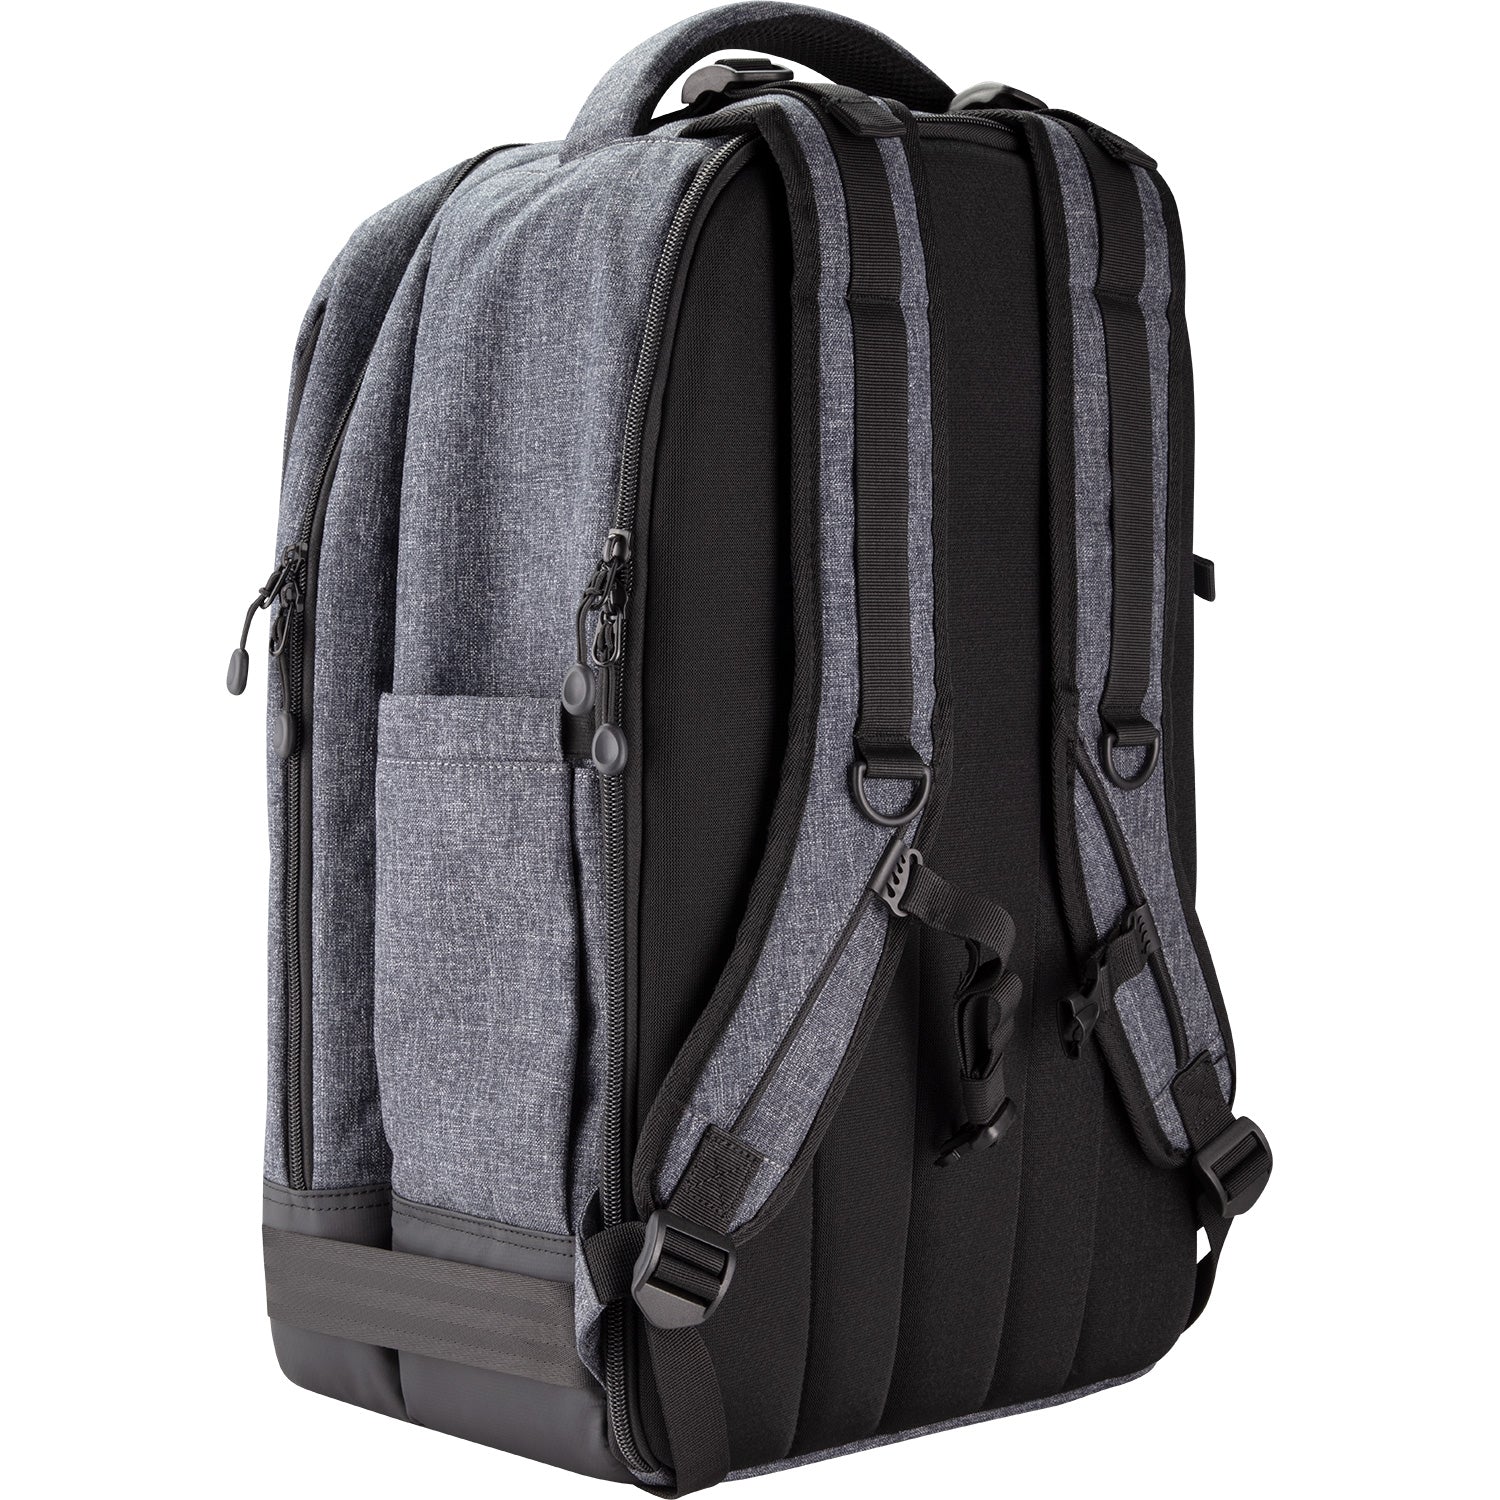 FJ200 Strobe 3-Light Backpack Kit with FJ-X3 M Universal Wireless Trigger